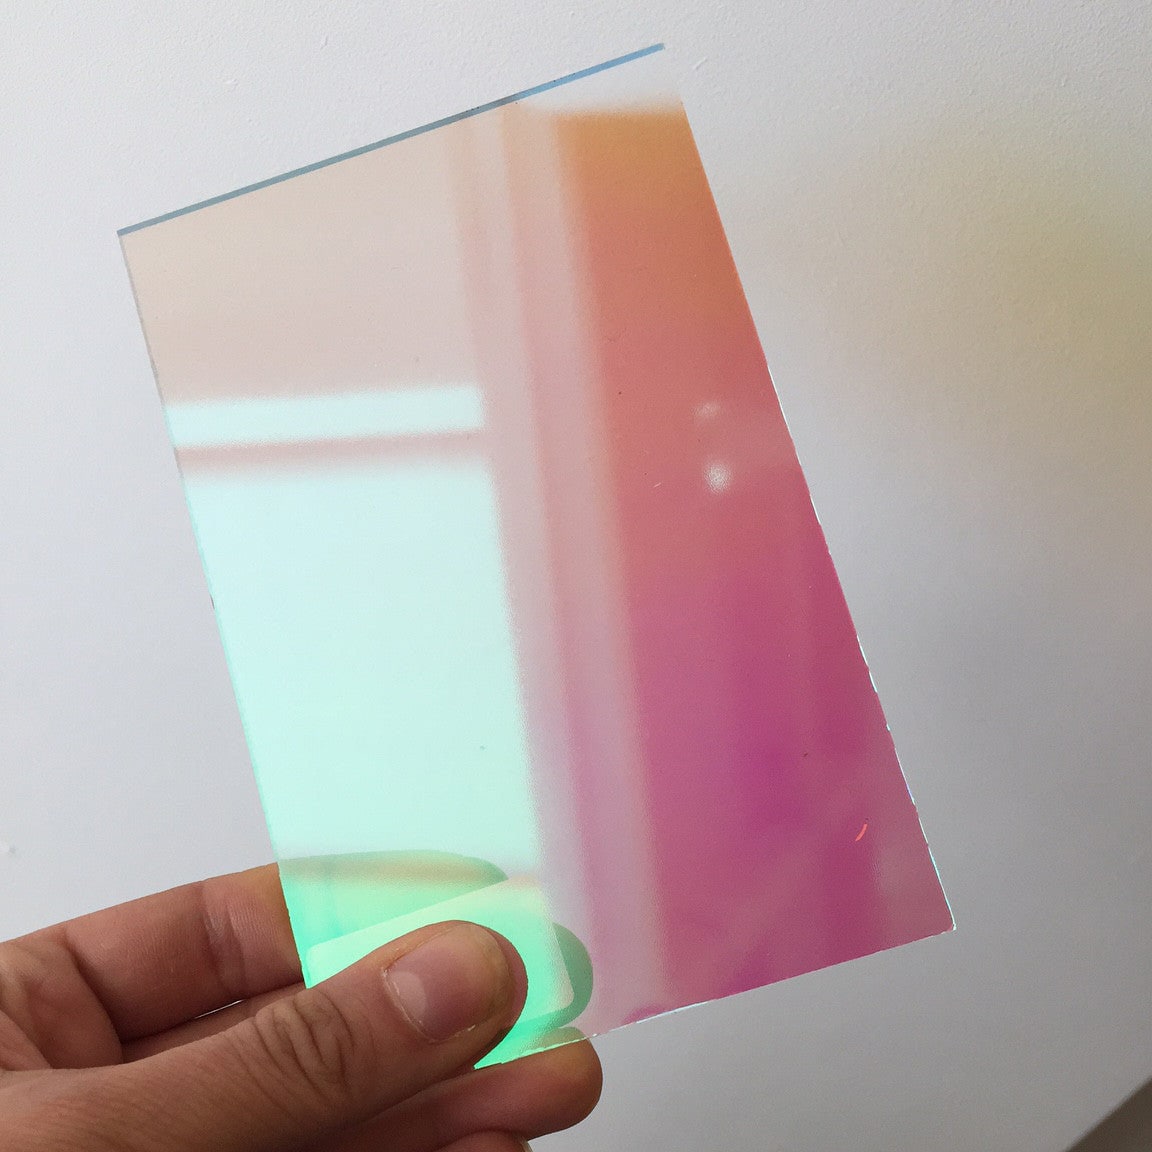 Adhesive Flexible Mirror Plastic Sheet Acrylic Tiles for Wall Decor